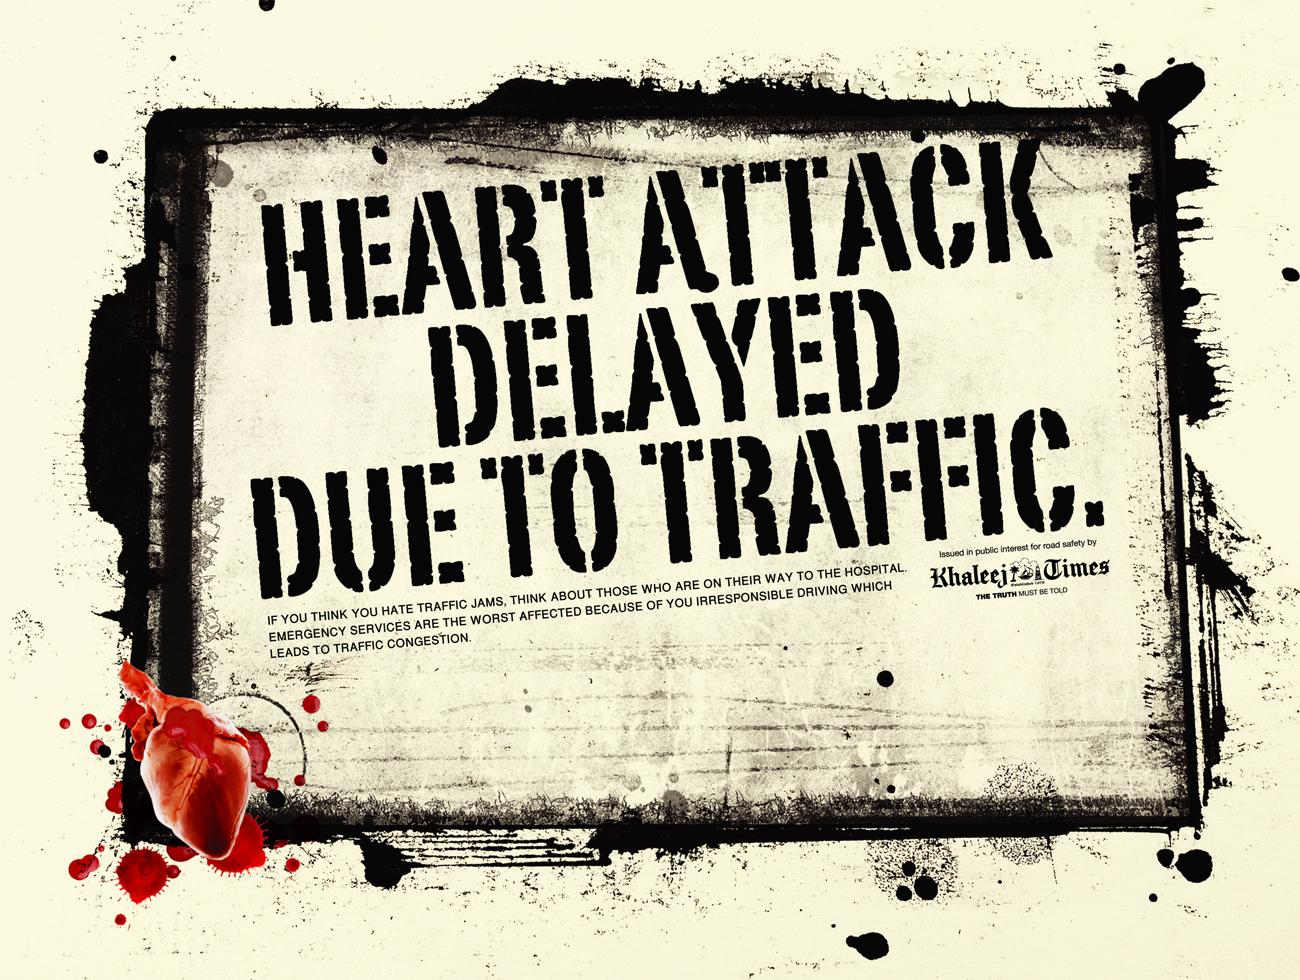 Praxis_Khaleej_Times_Traffic_Jam_Ambulance